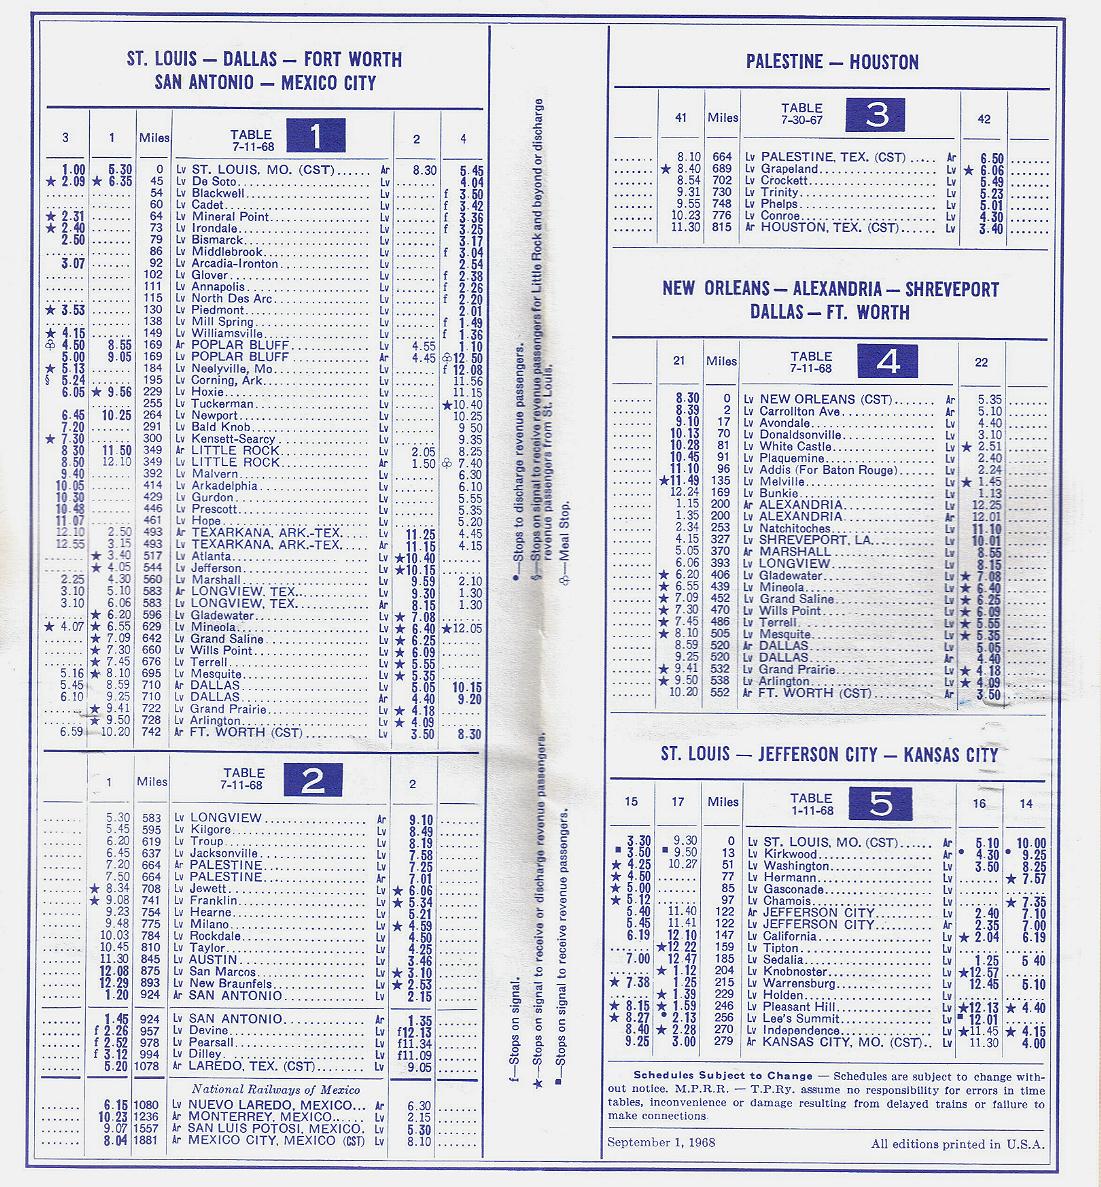 Sept. 1, 1968 Missouri Pacific schedule